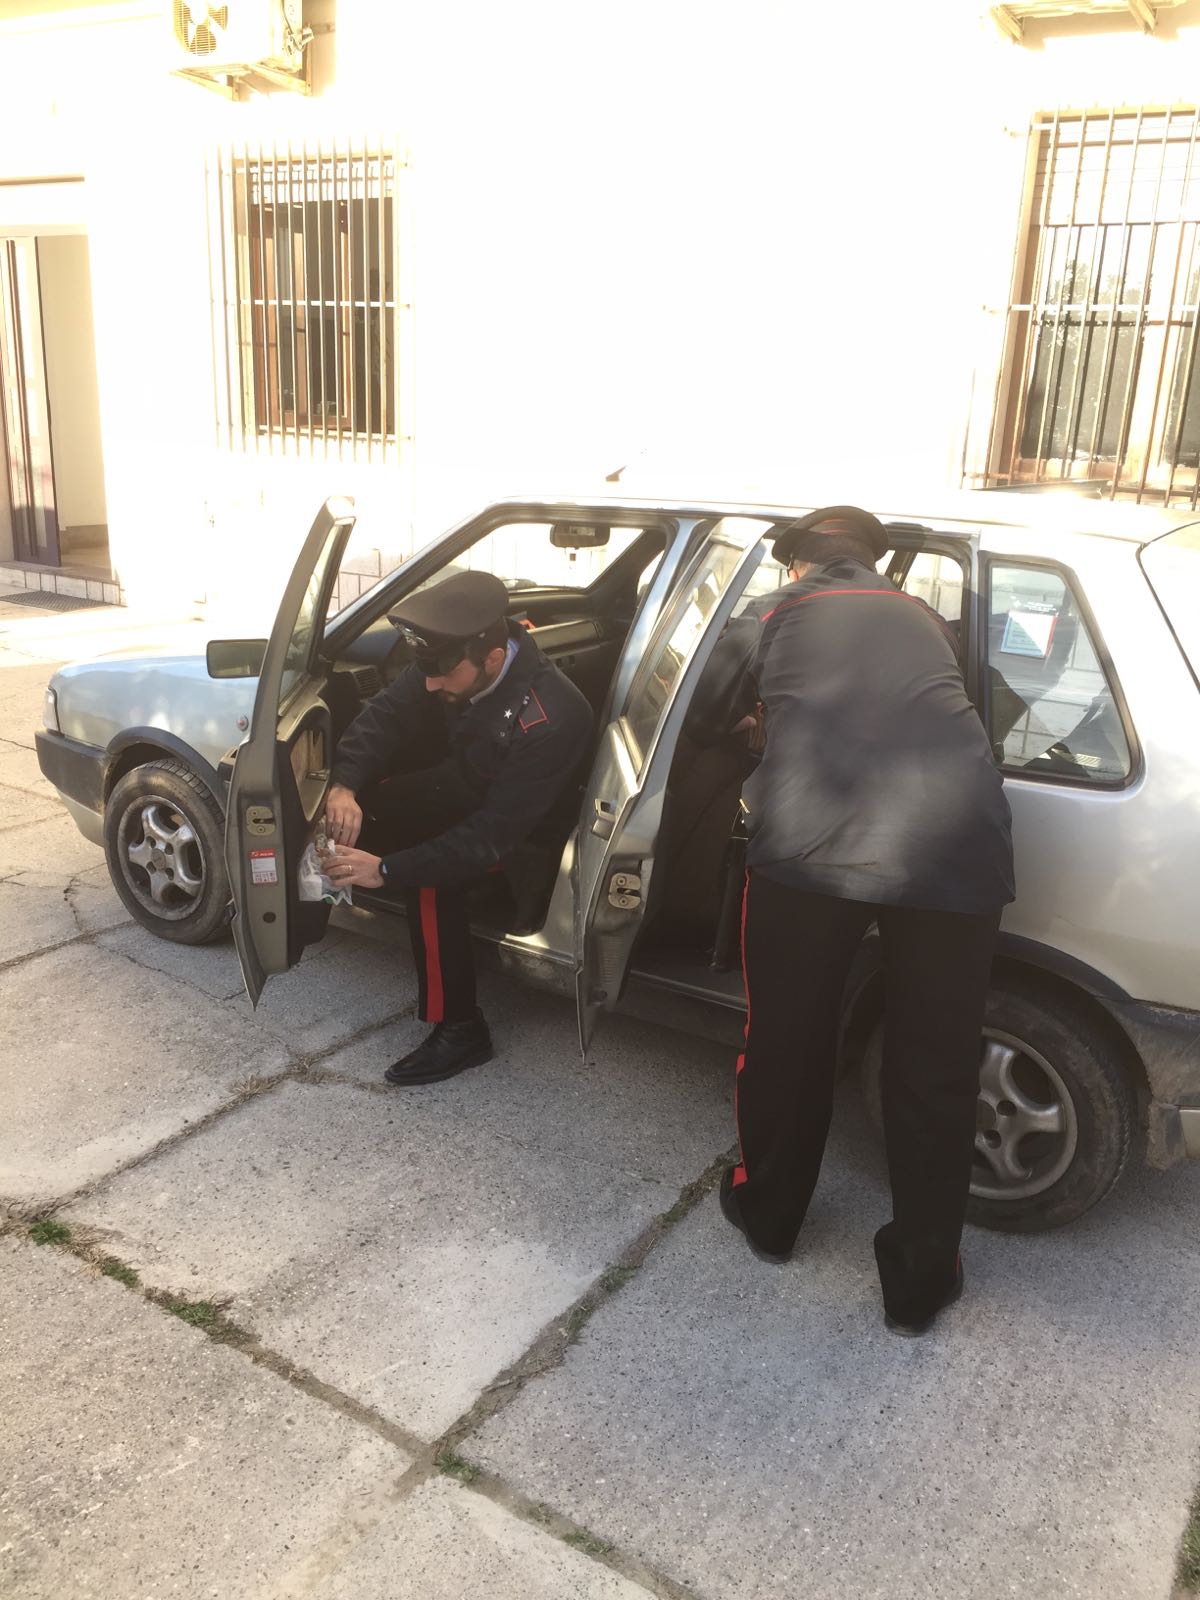 carabinieri perquisizione auto 